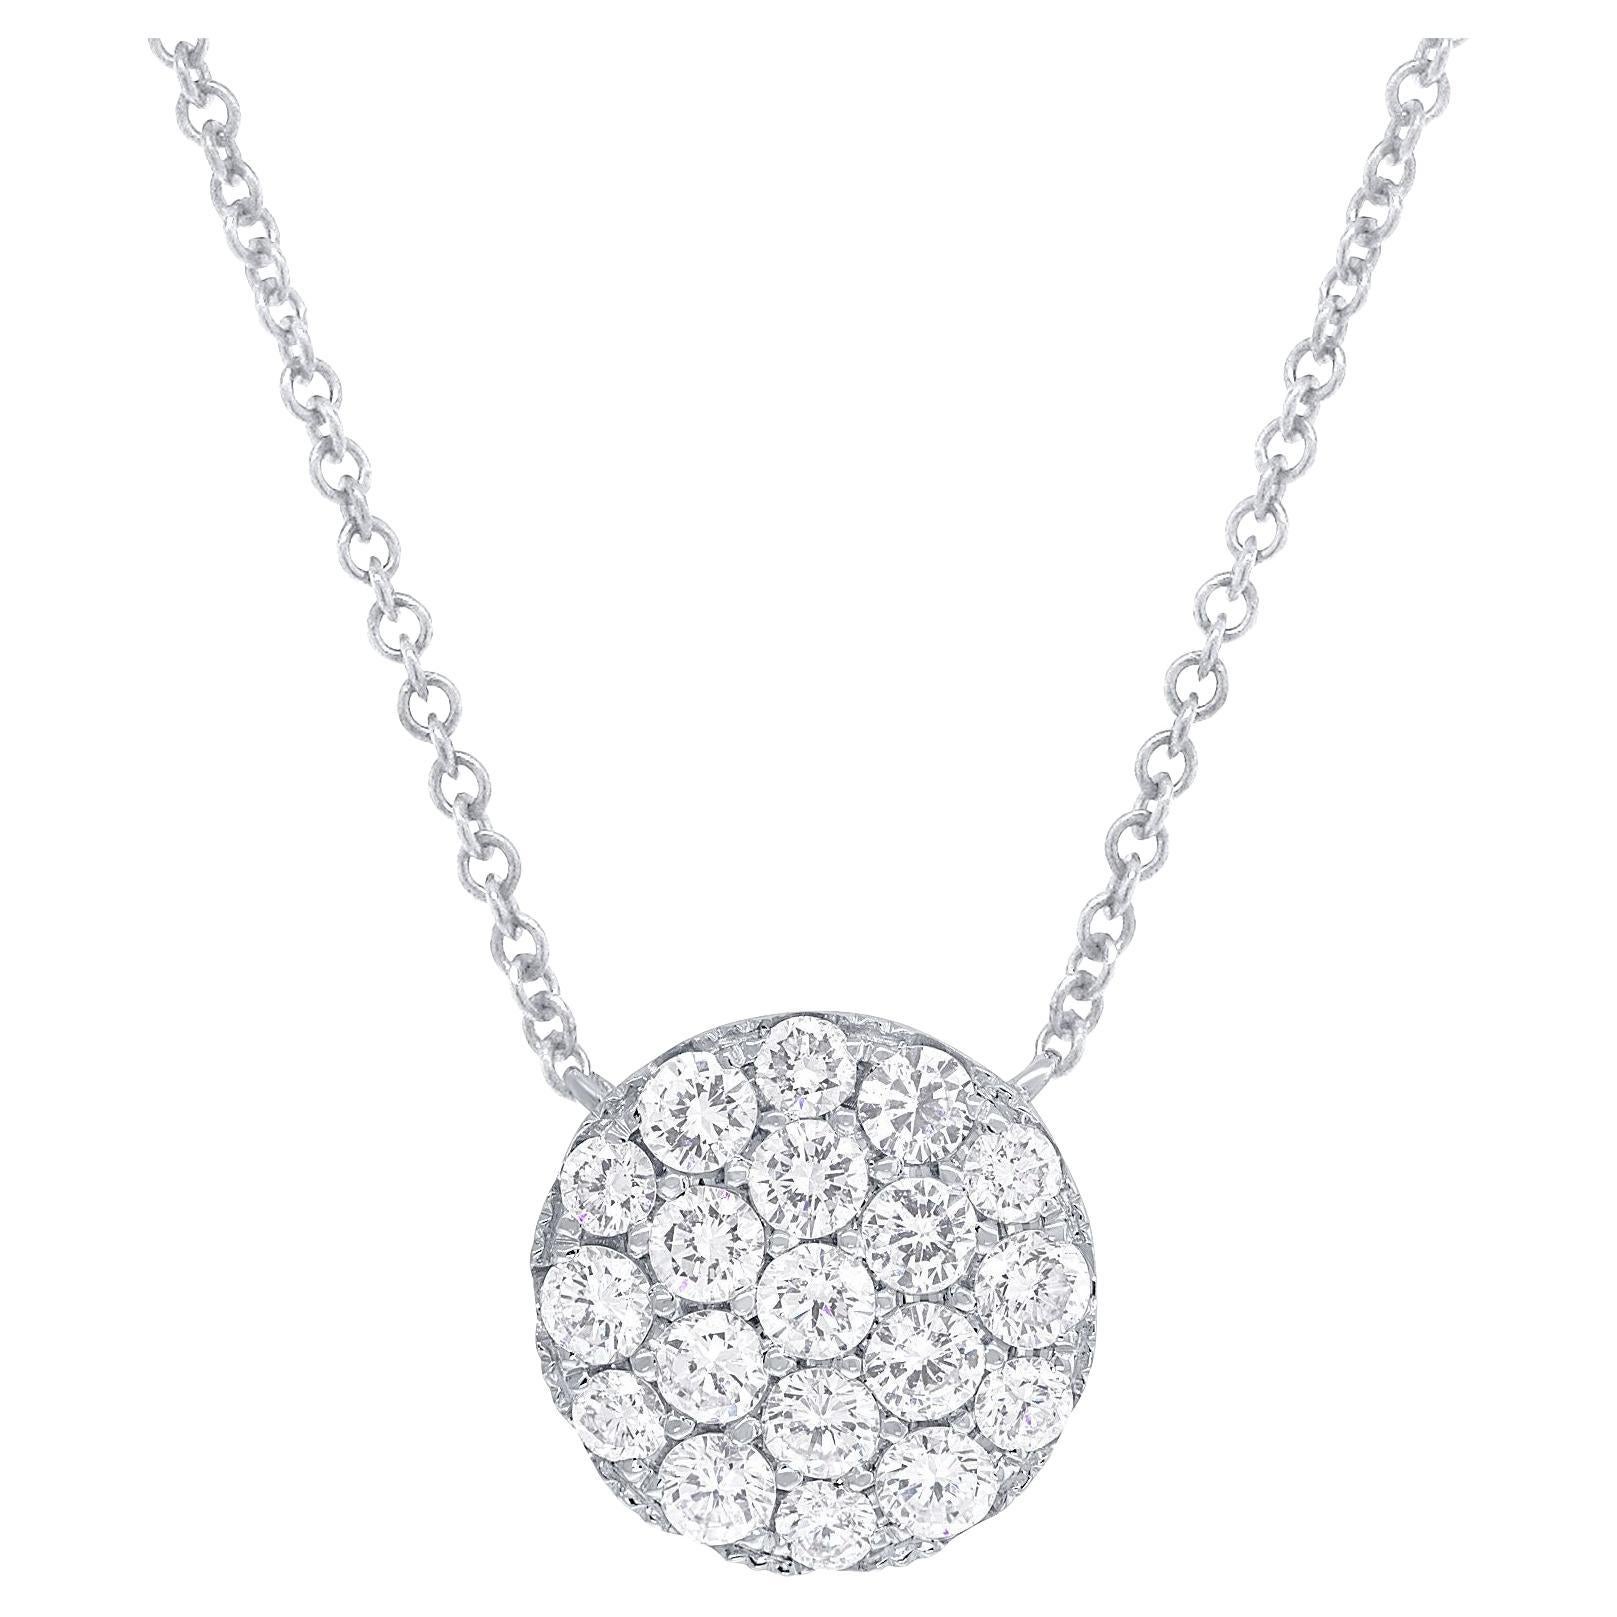 Diana M. 14 kt white gold diamond pendant with pave circle design 